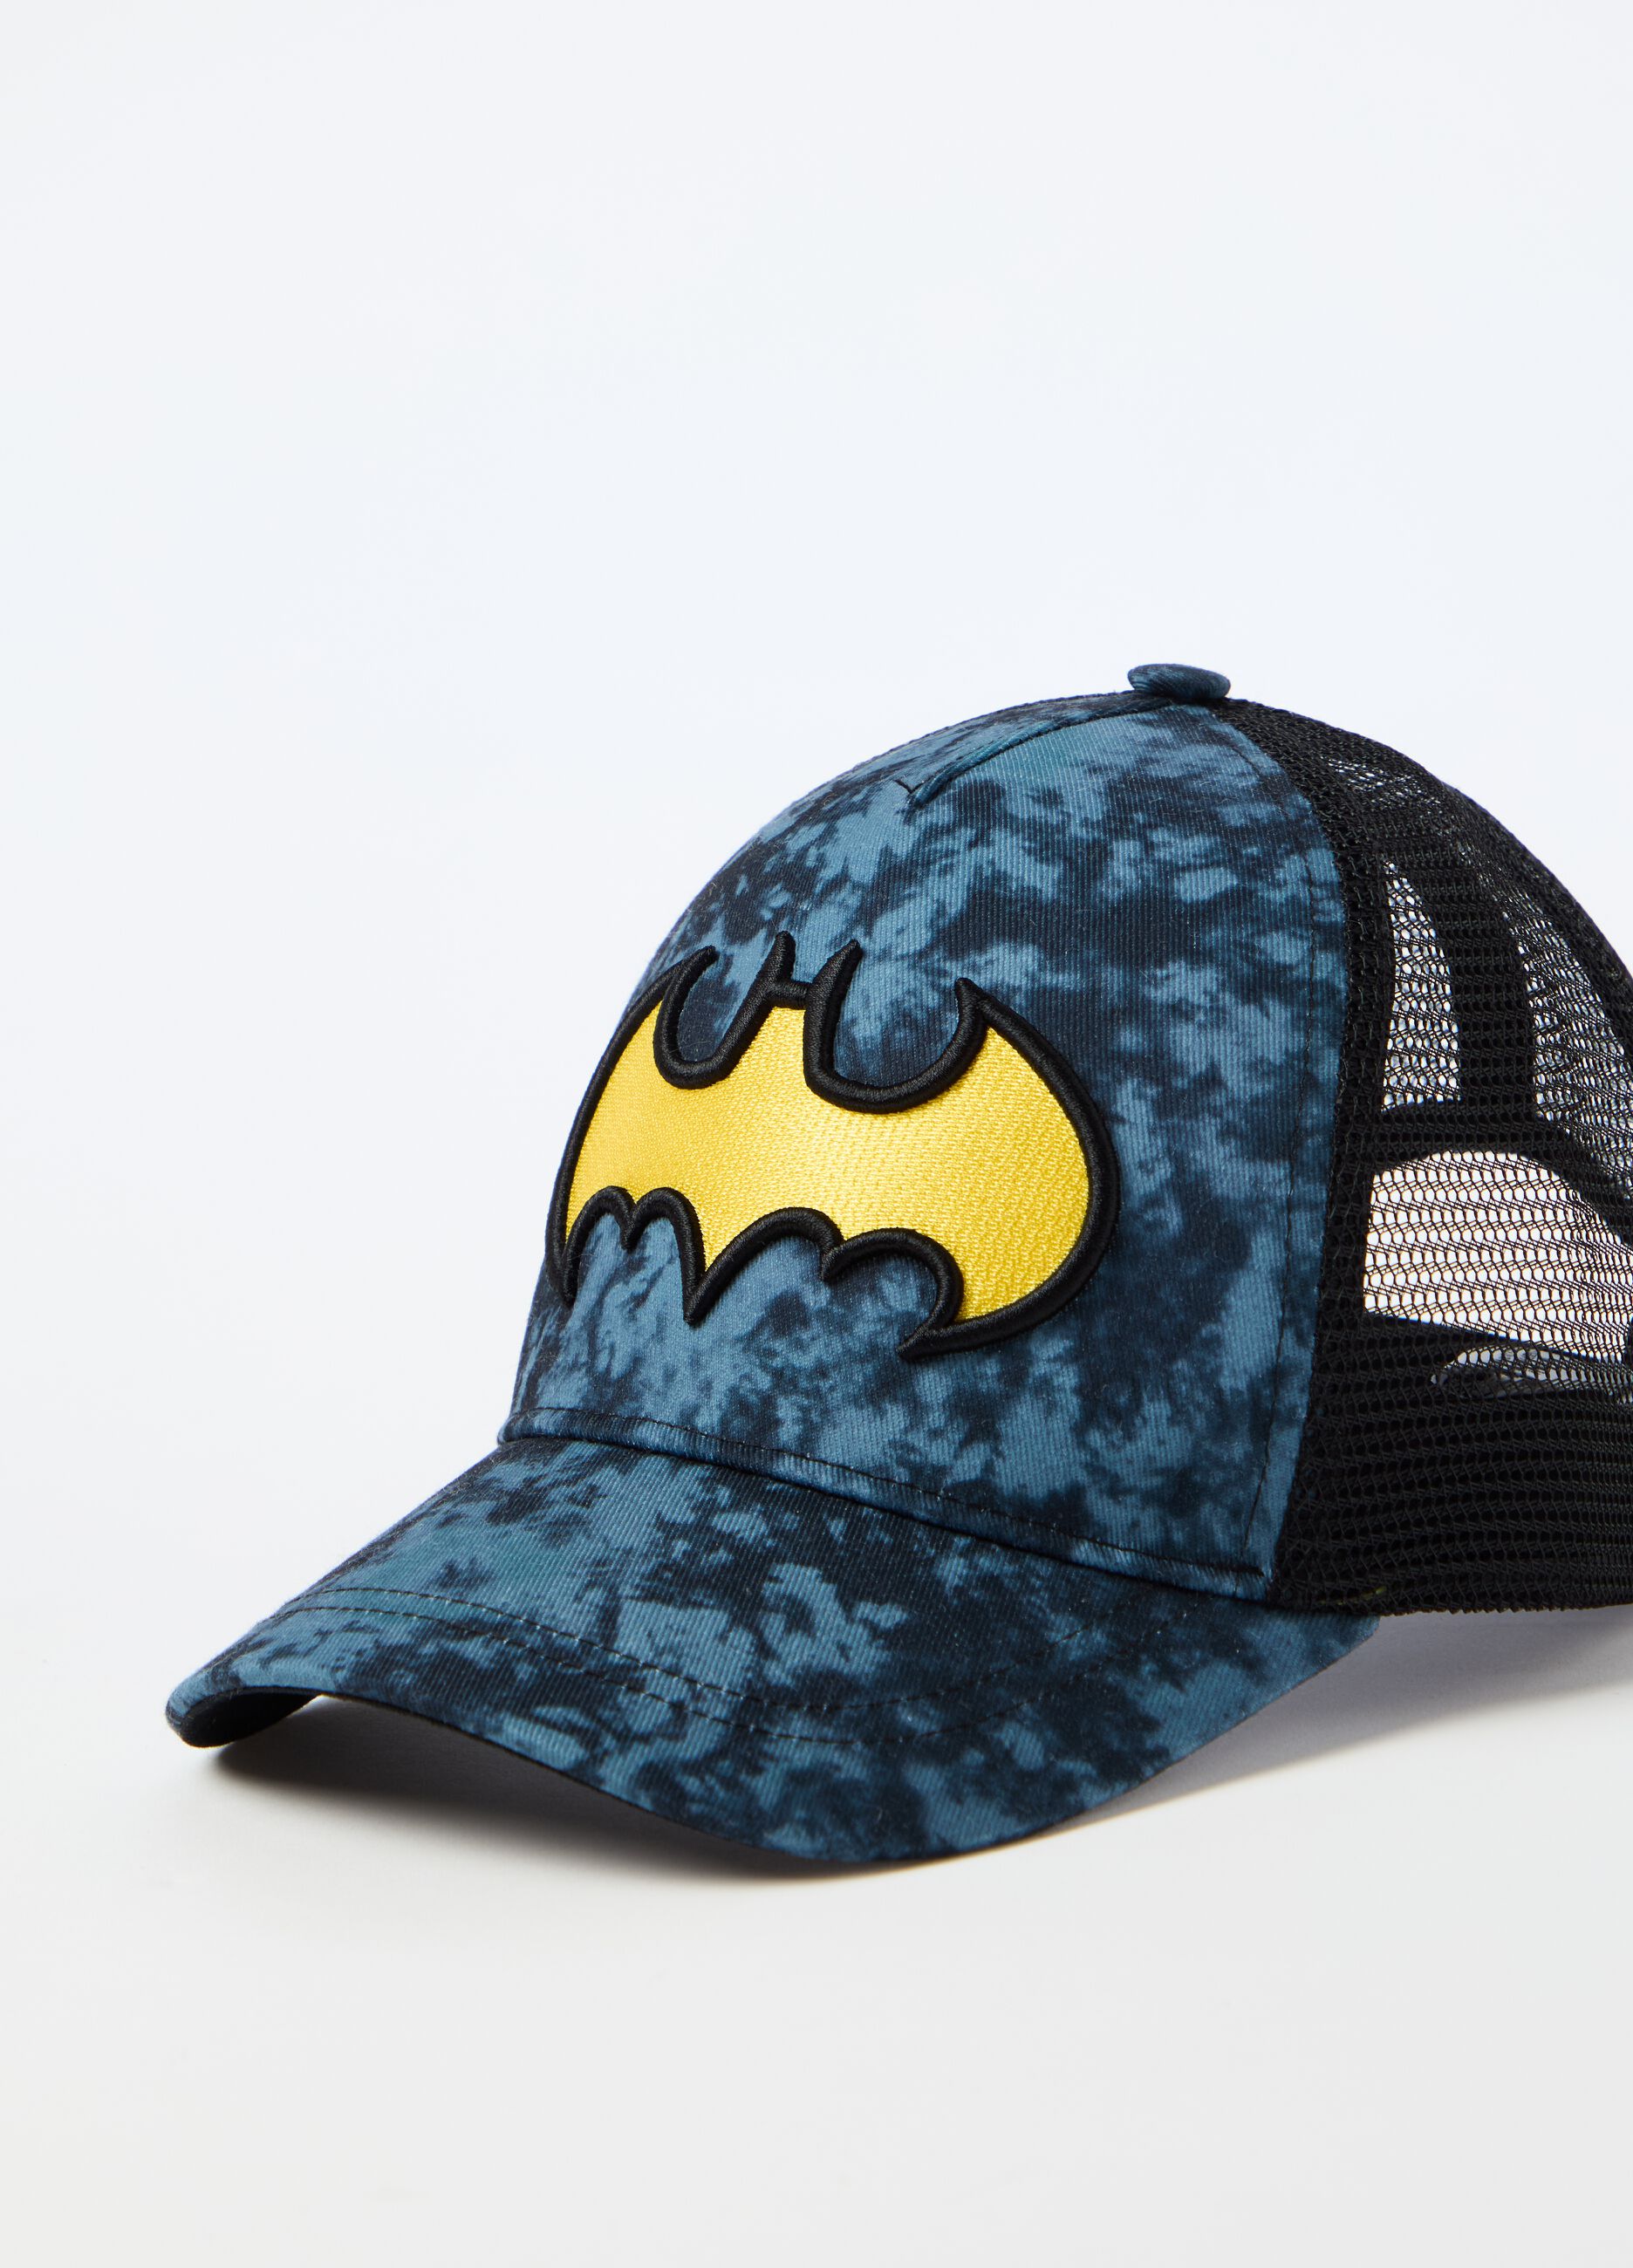 Baseball cap with Batman patch